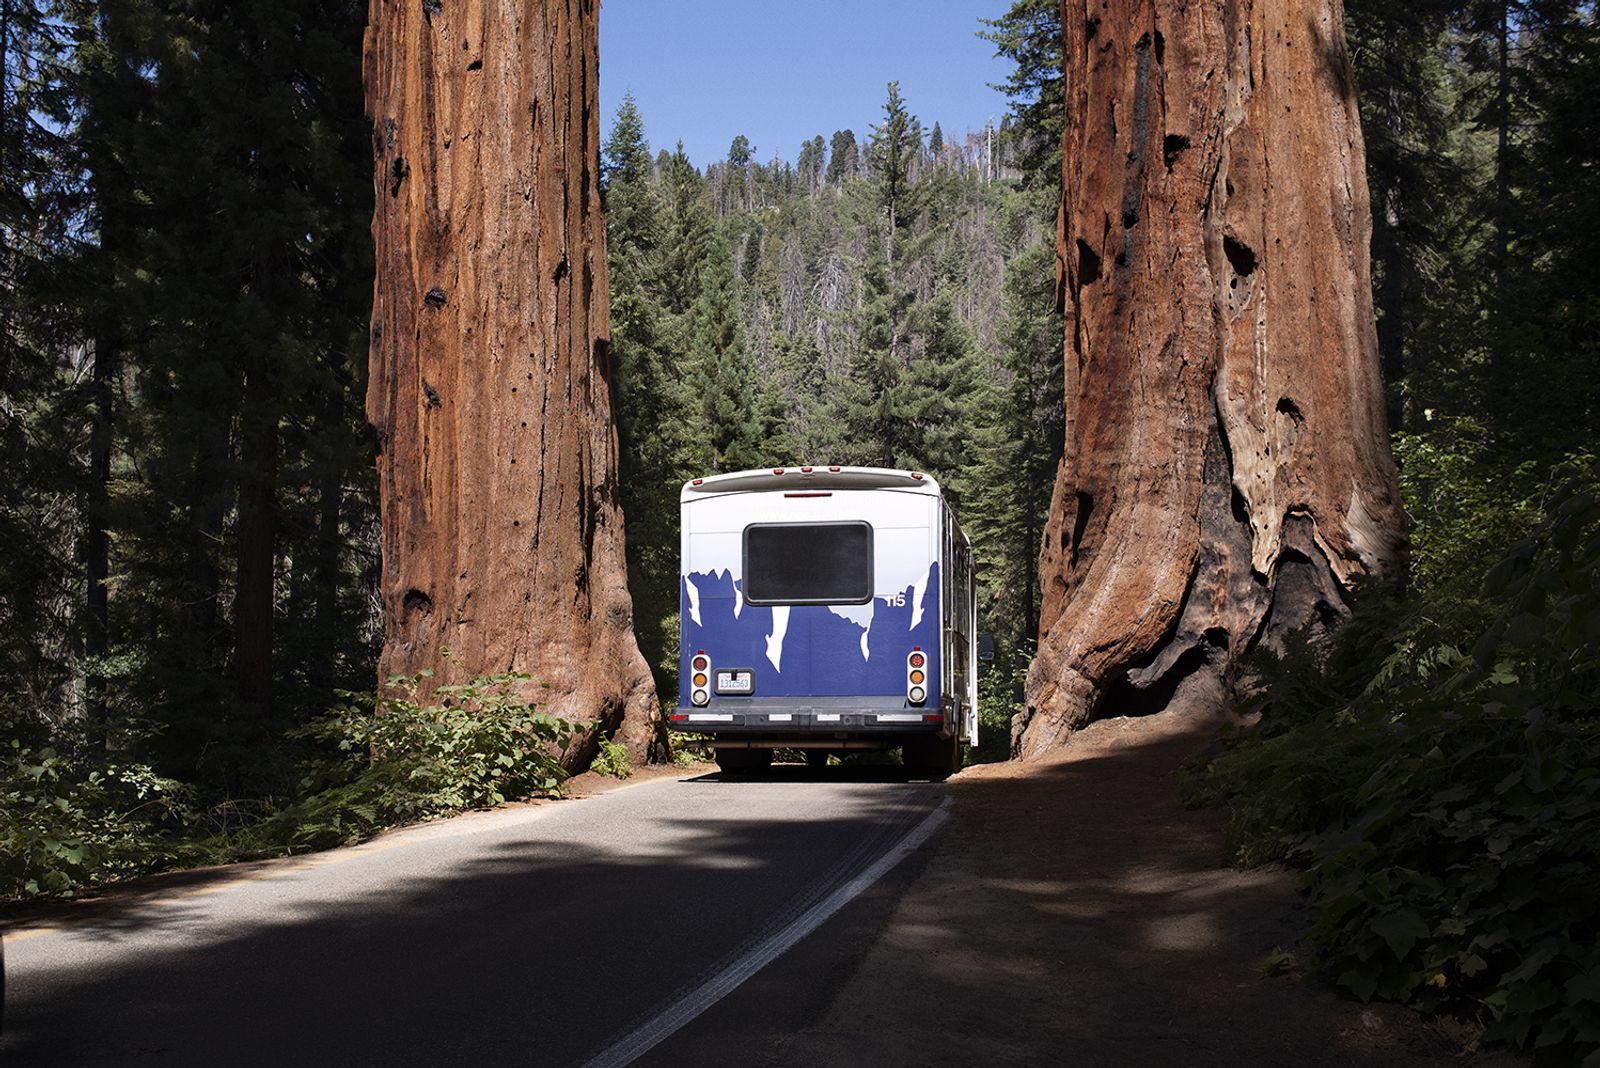 © Daria Addabbo - Sequoia National Park, California. August 2019